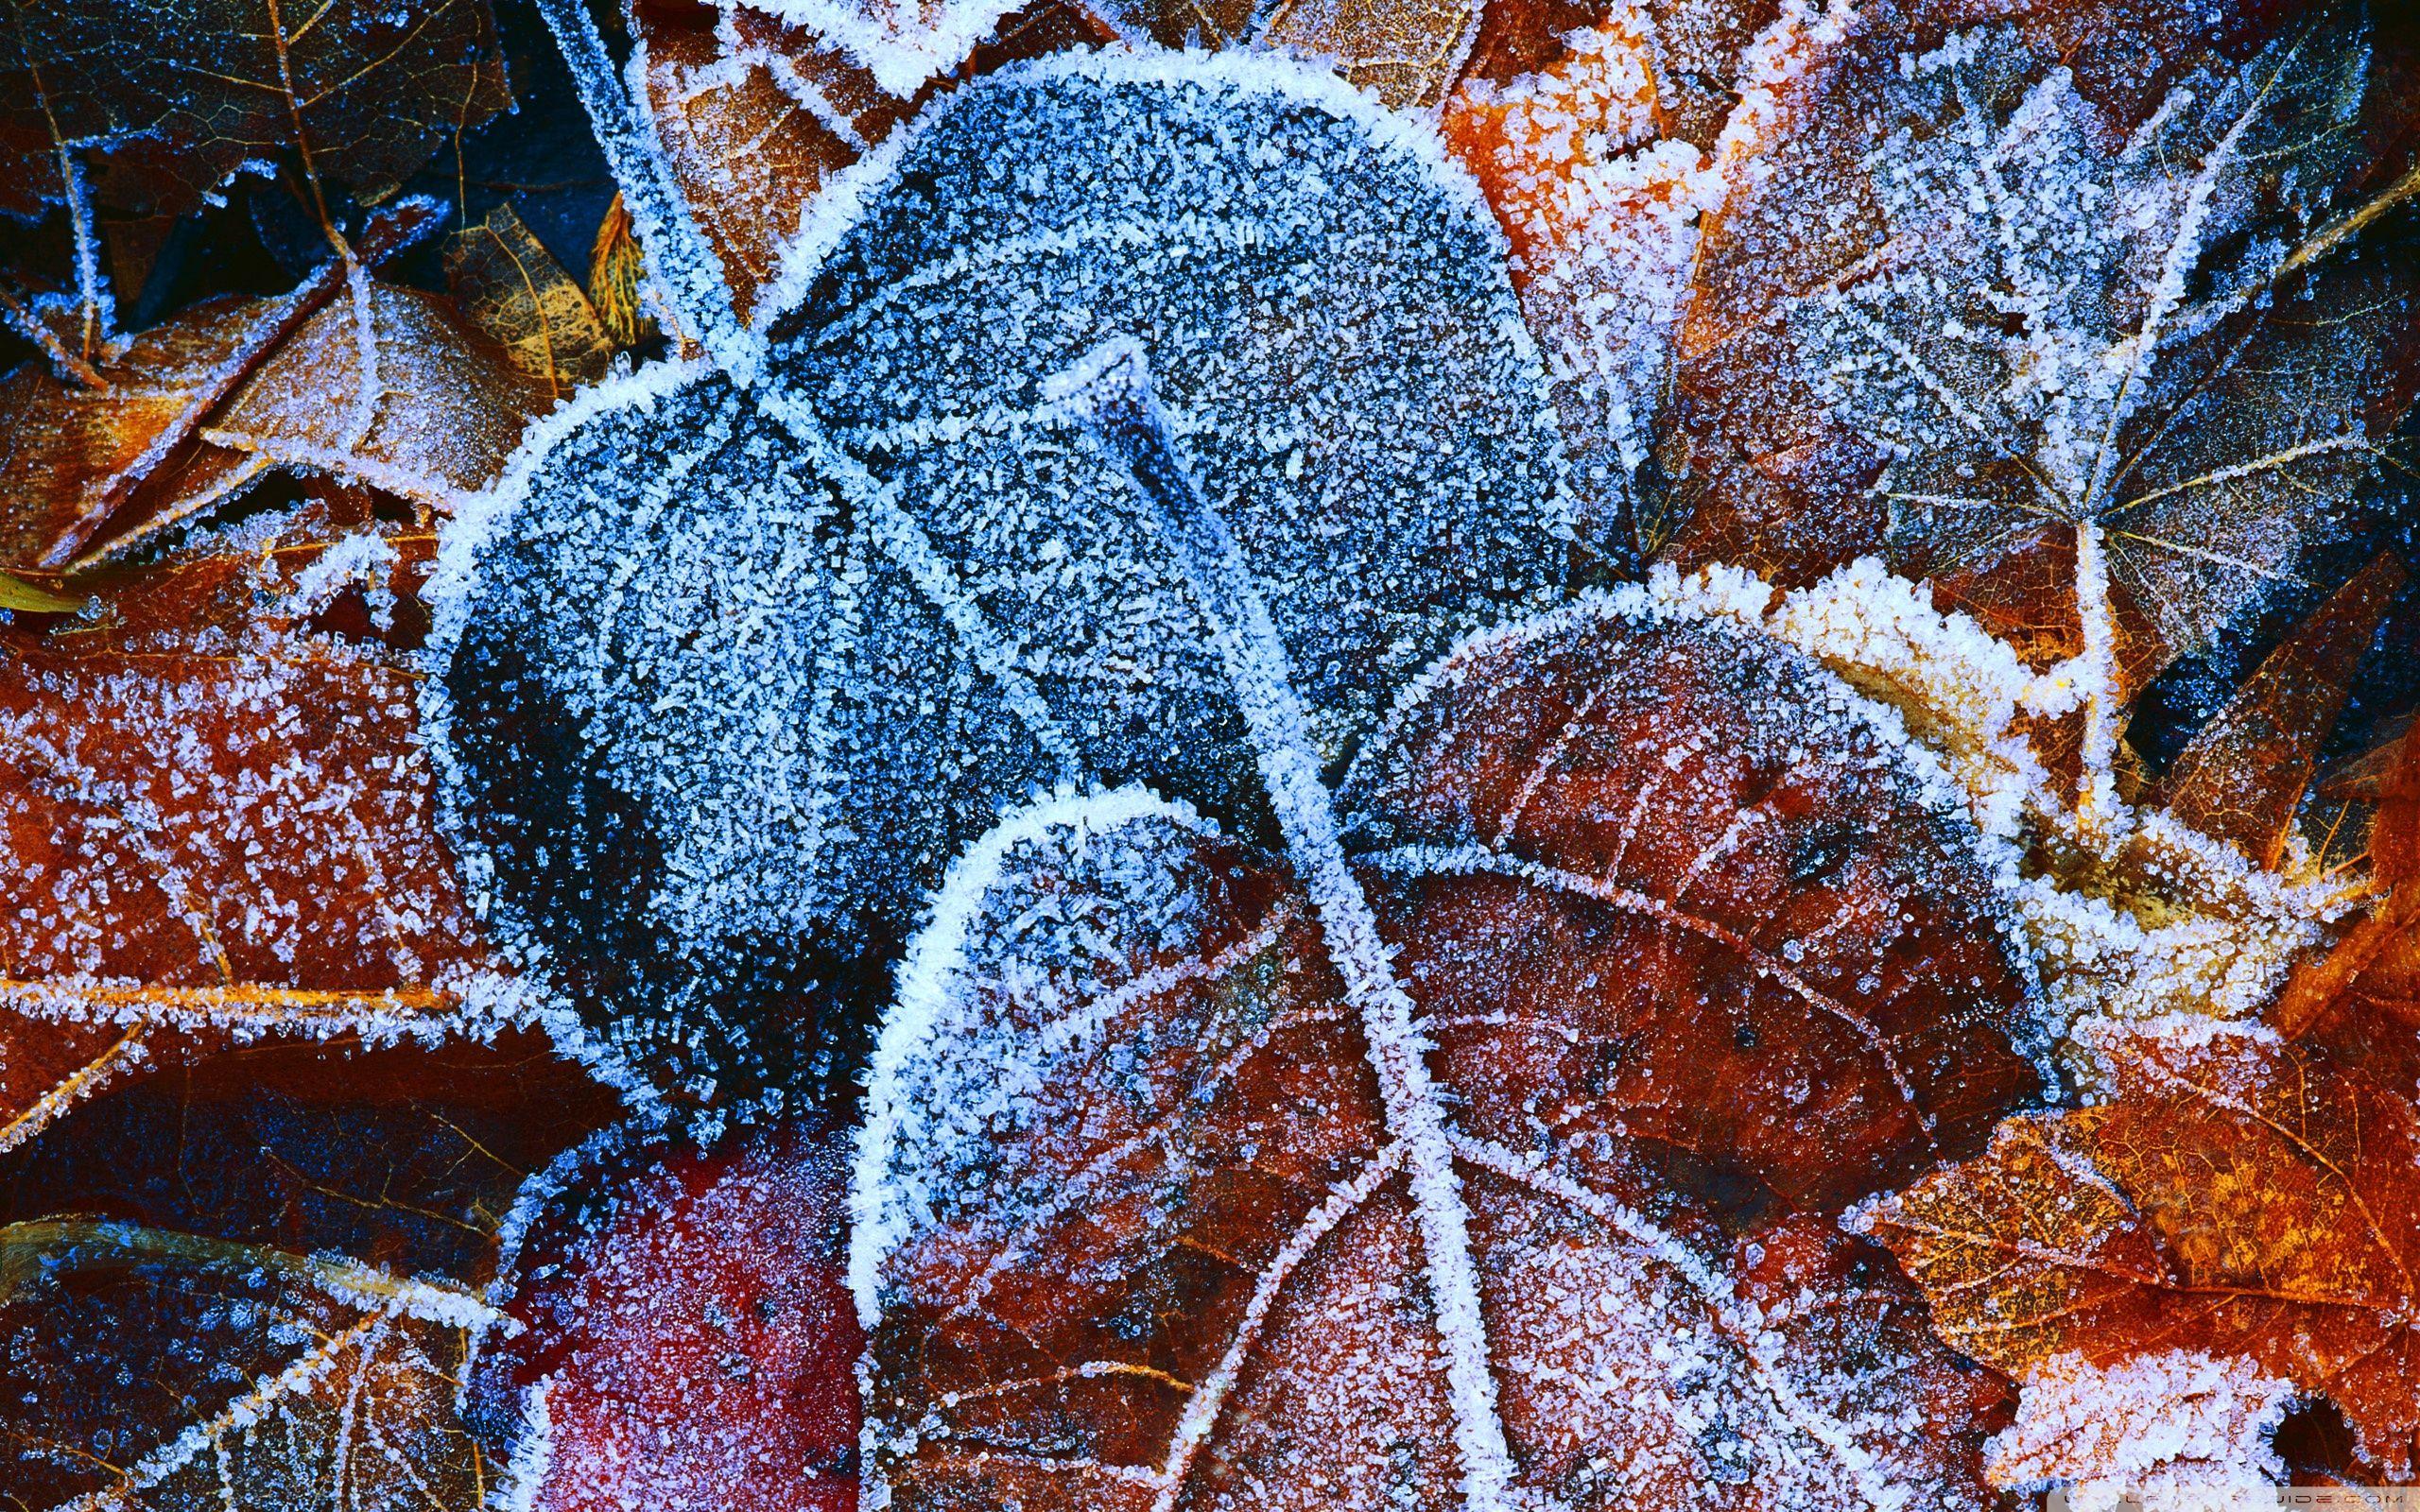 Nature frost winter seasons window glass mood bokeh cold freezing  photography wallpaper  1920x1200  27774  WallpaperUP